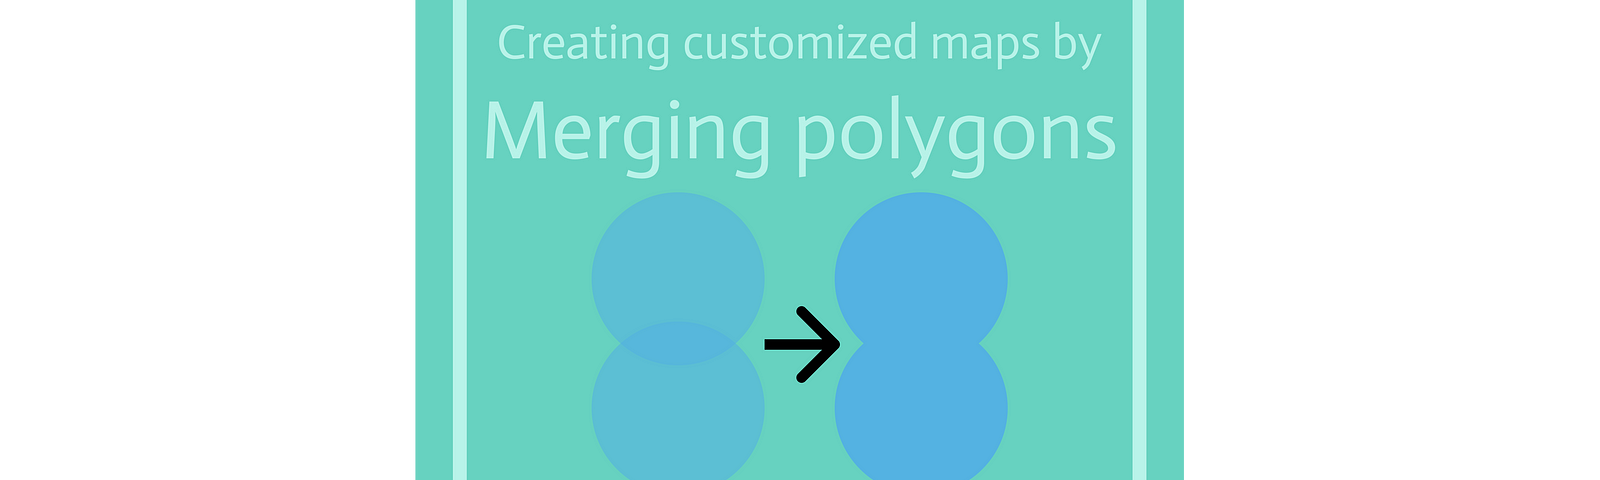 Self-made image. Merging polygons.